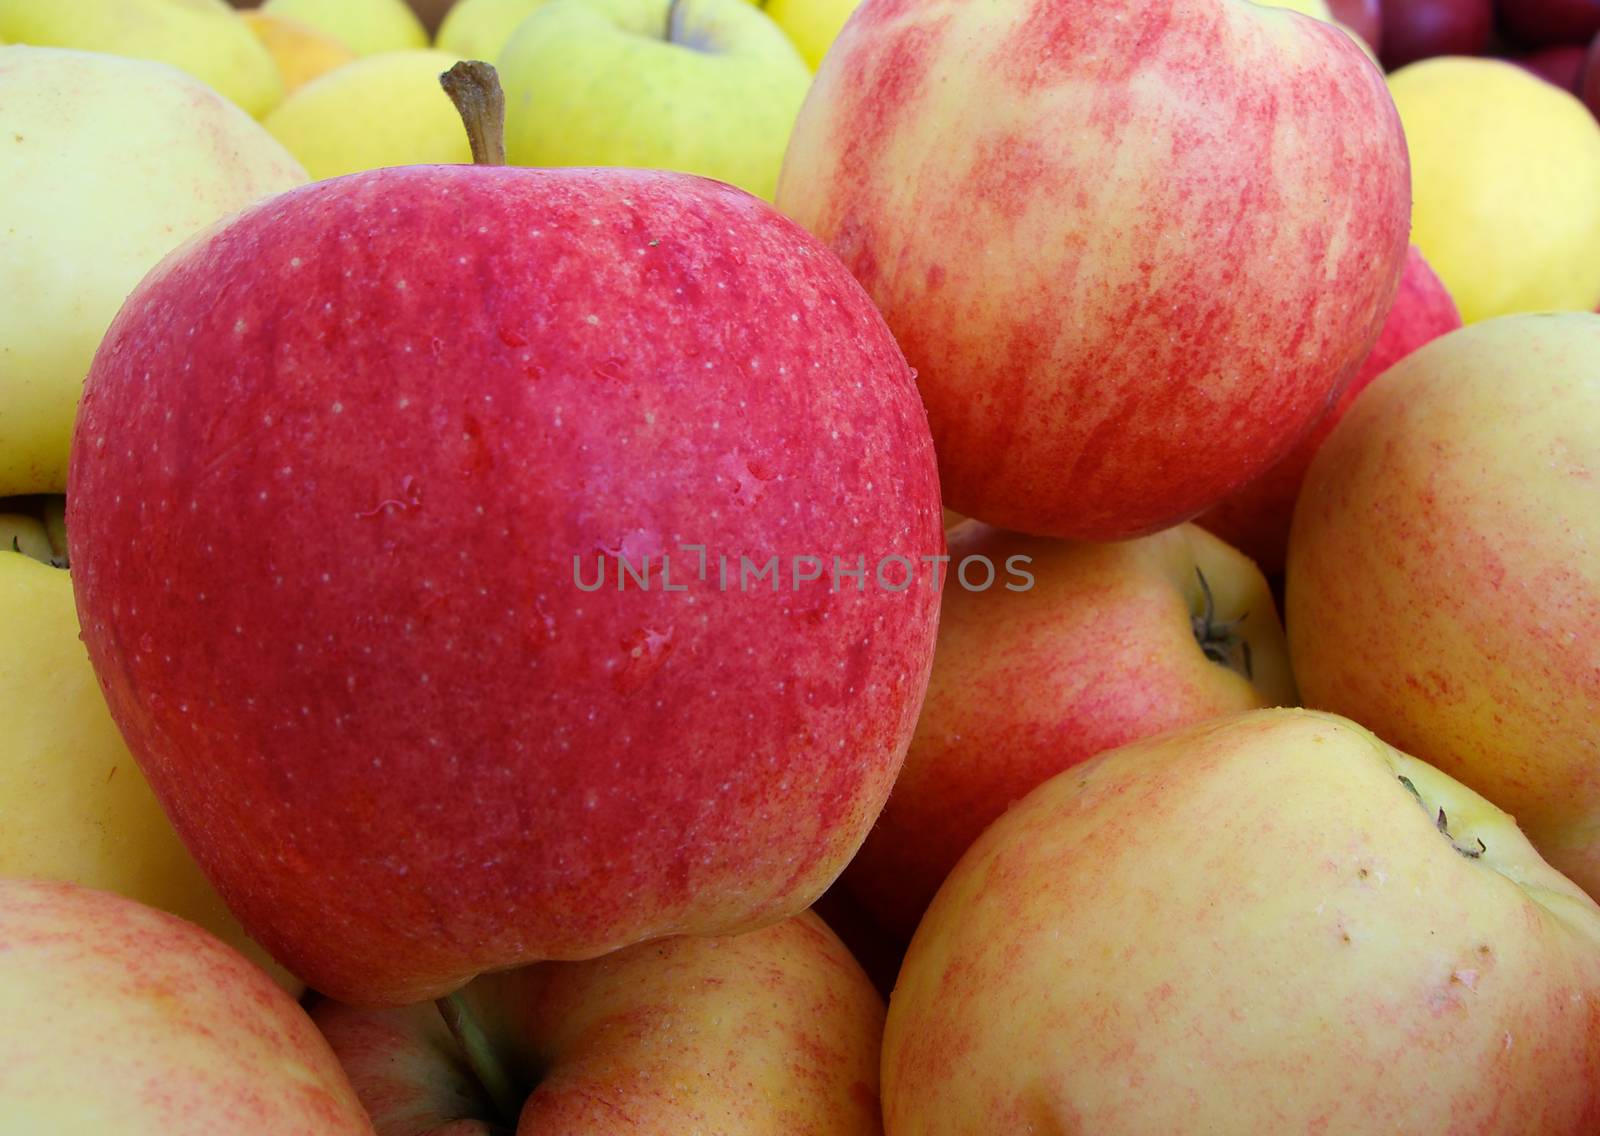 Gala Apples by bobkeenan